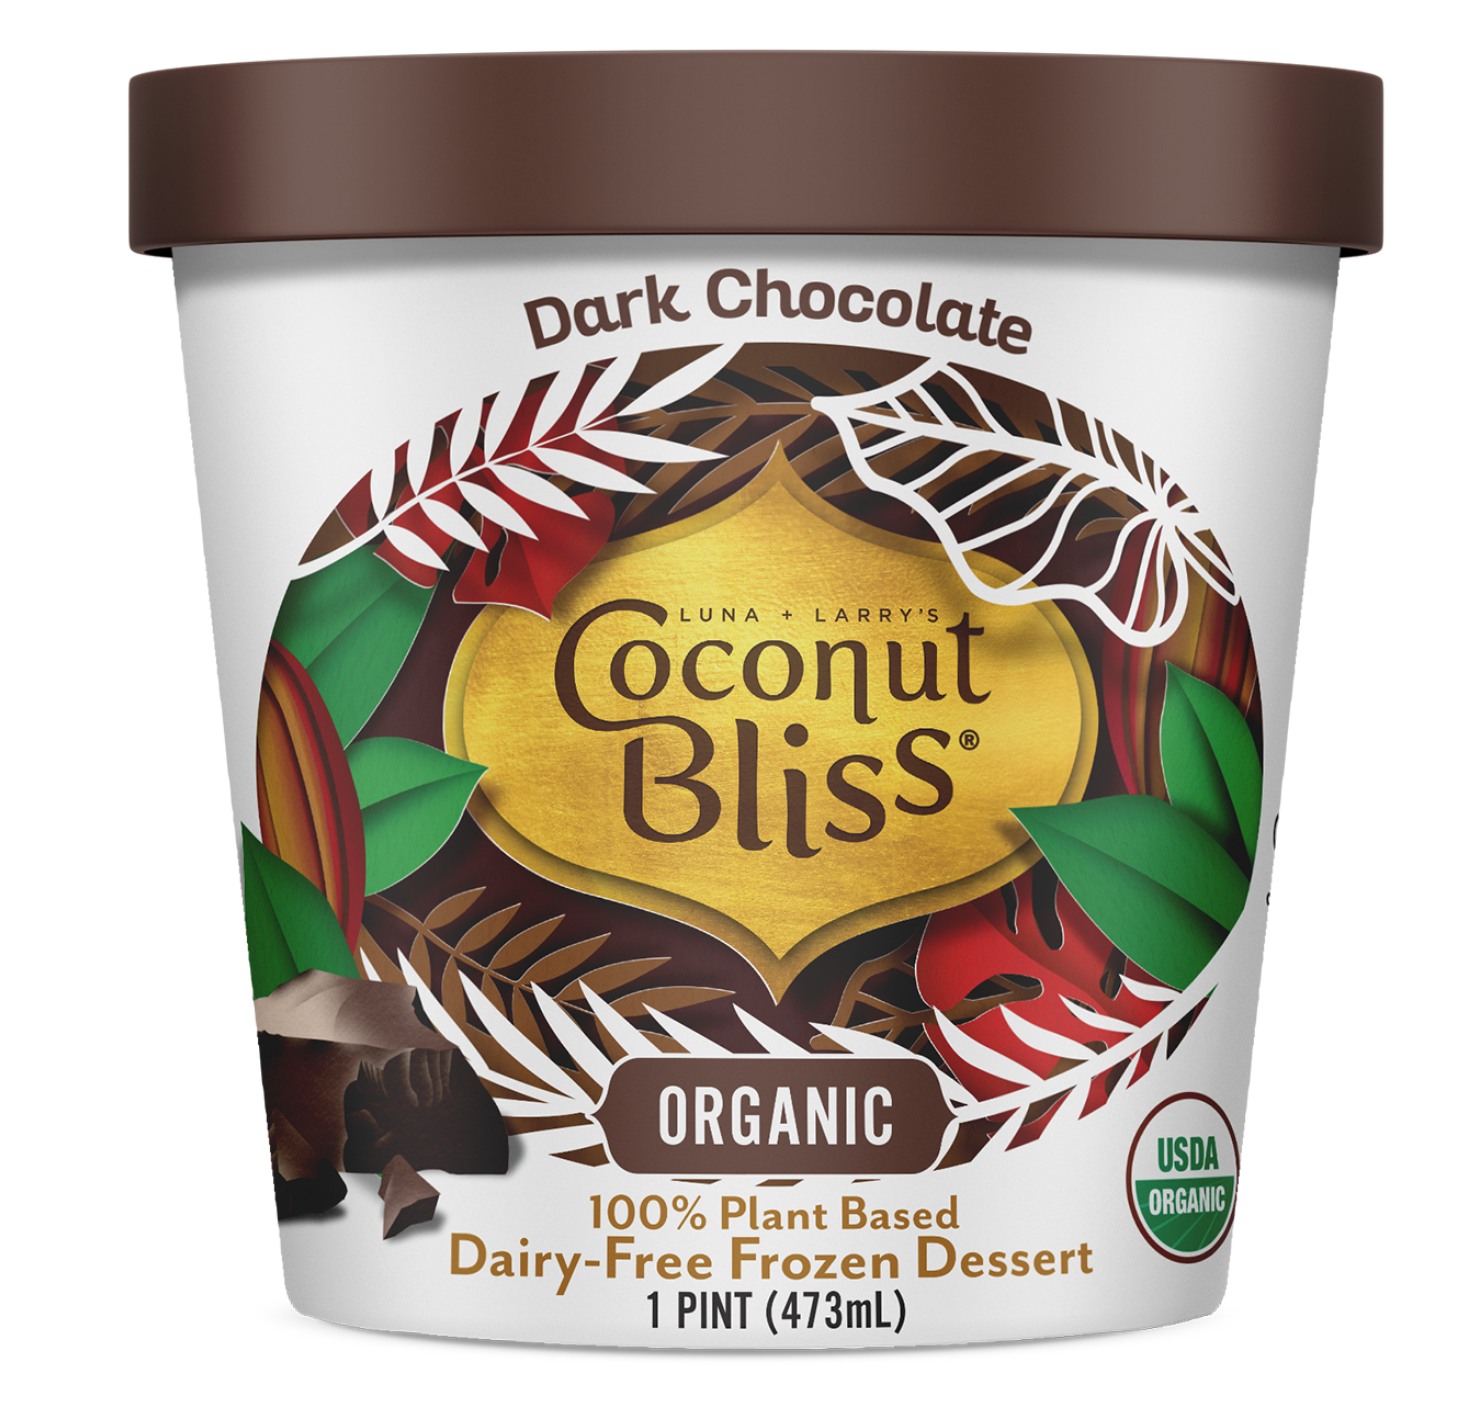 Coconut Bliss dark chocolate ice cream